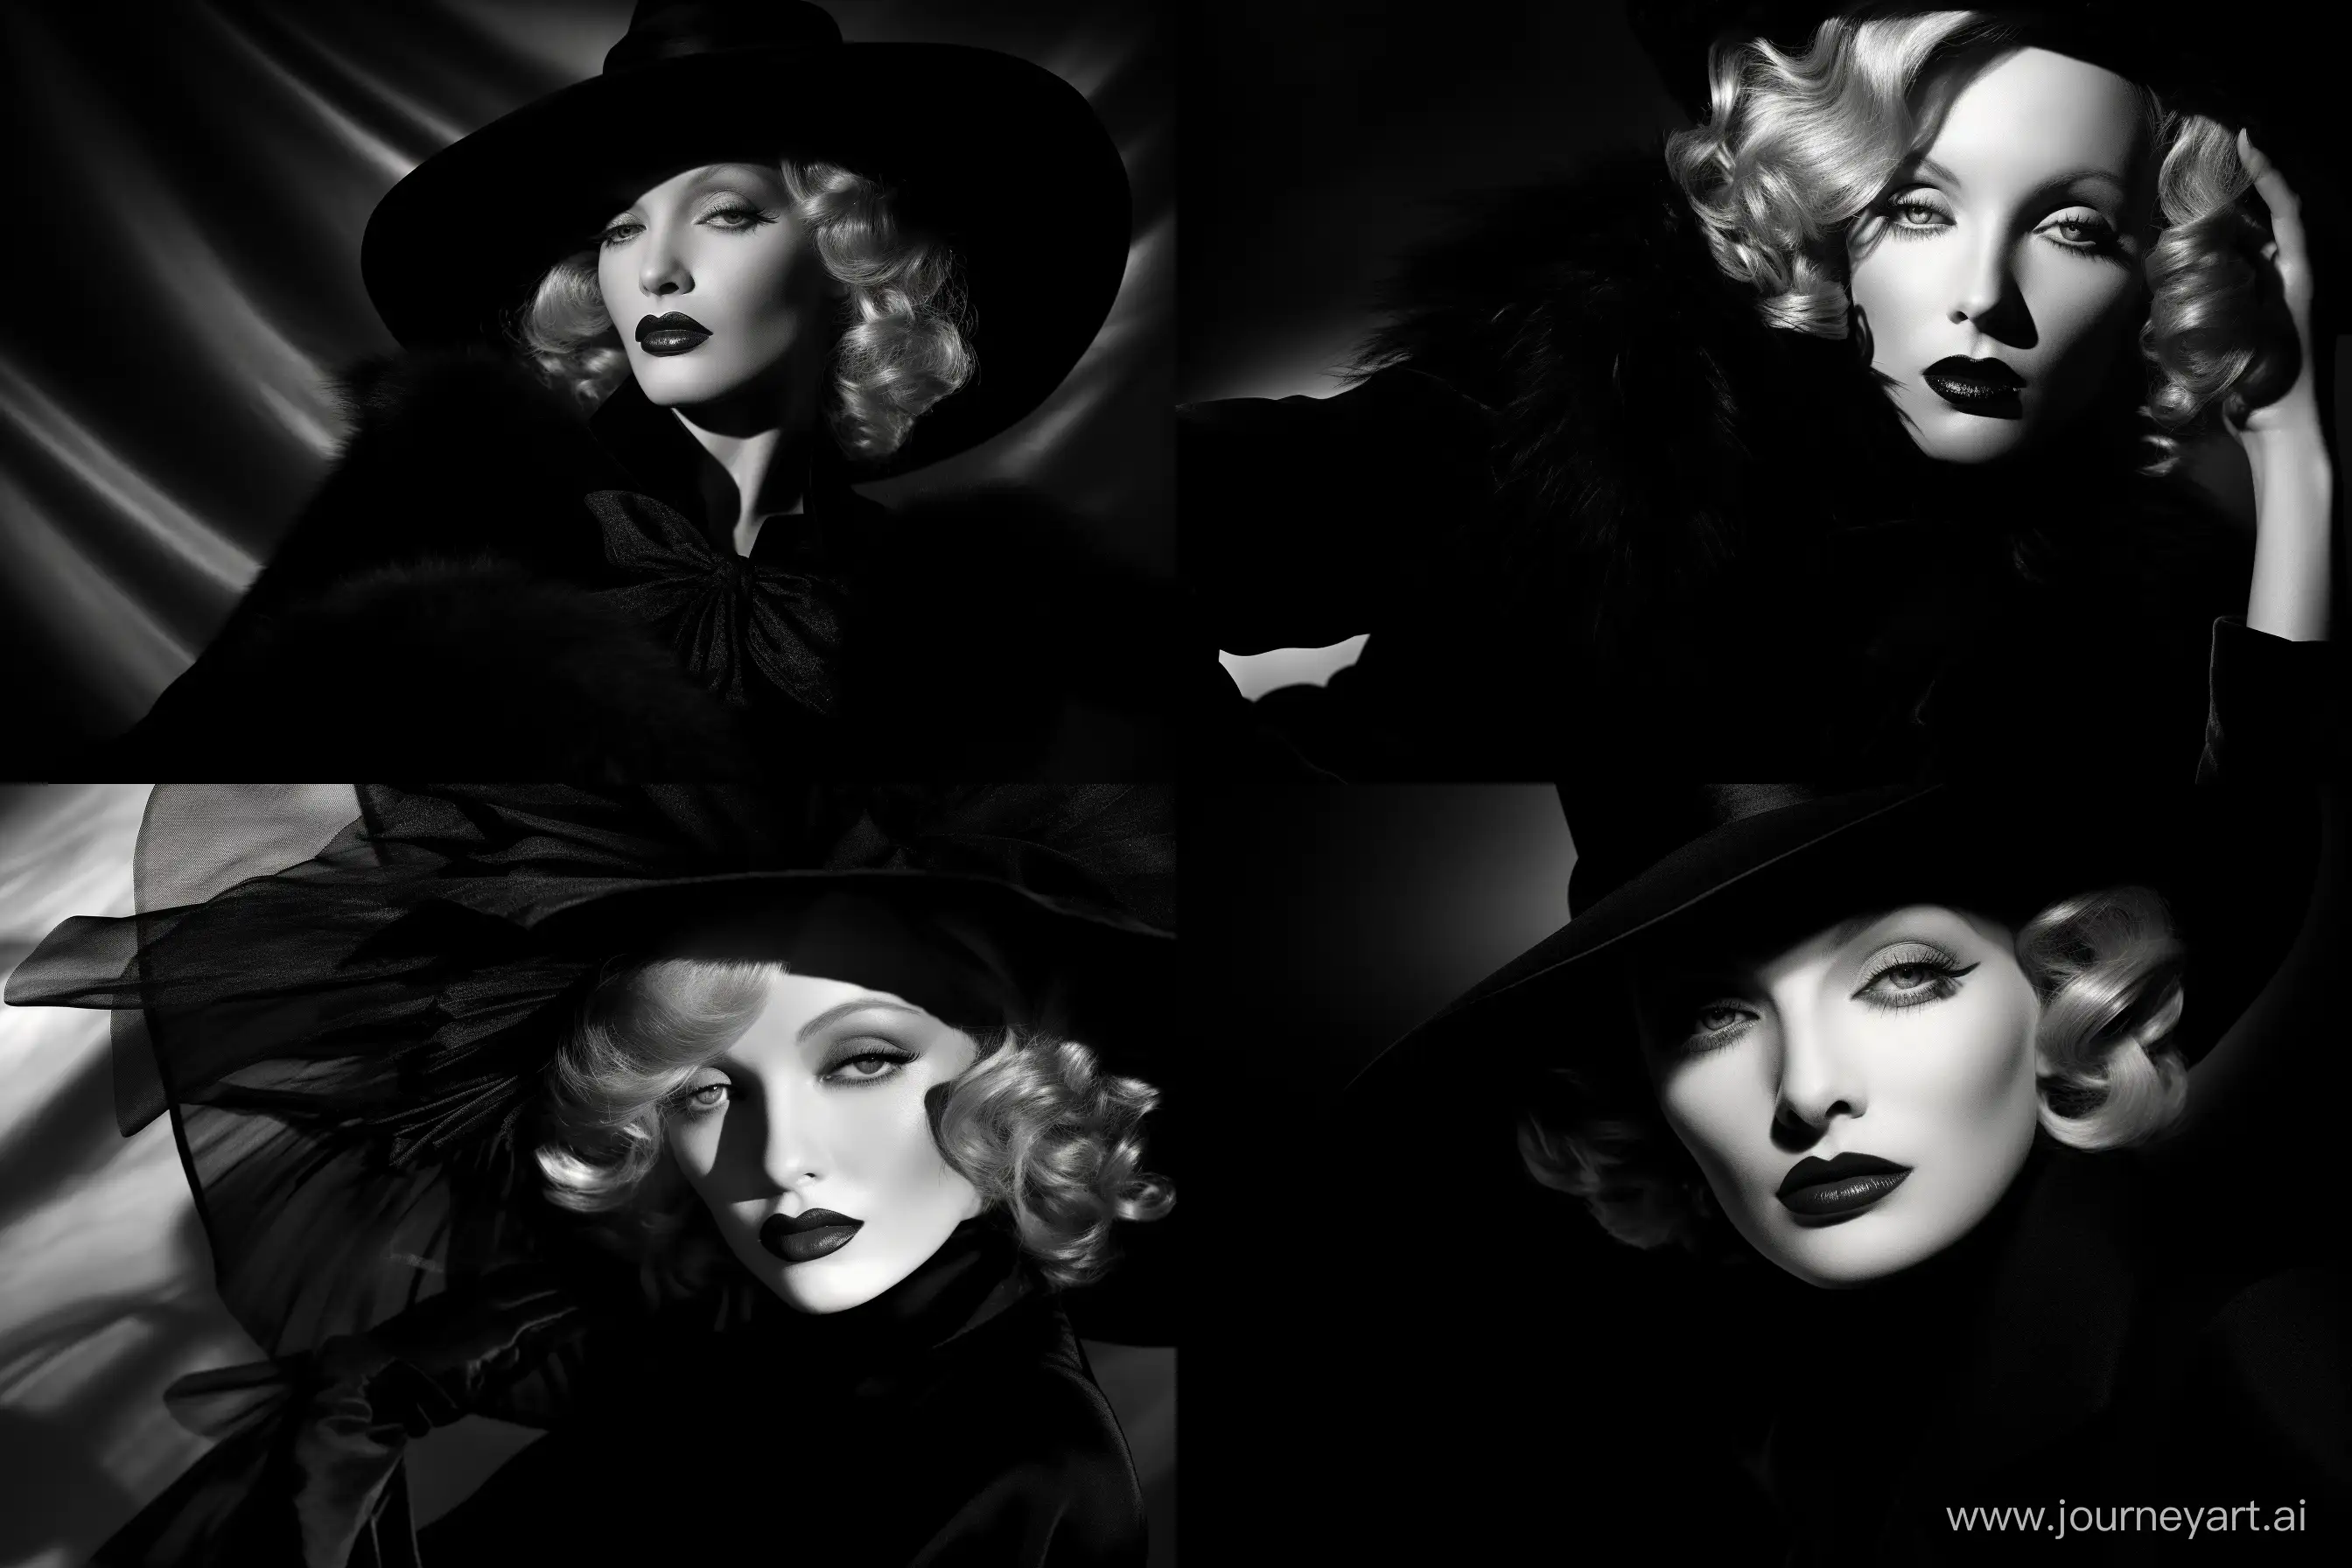 Film Noir Femme: Marlene Dietrich, Capture the essence of film noir with a mysterious and glamorous fashion portrait. --ar 3:2